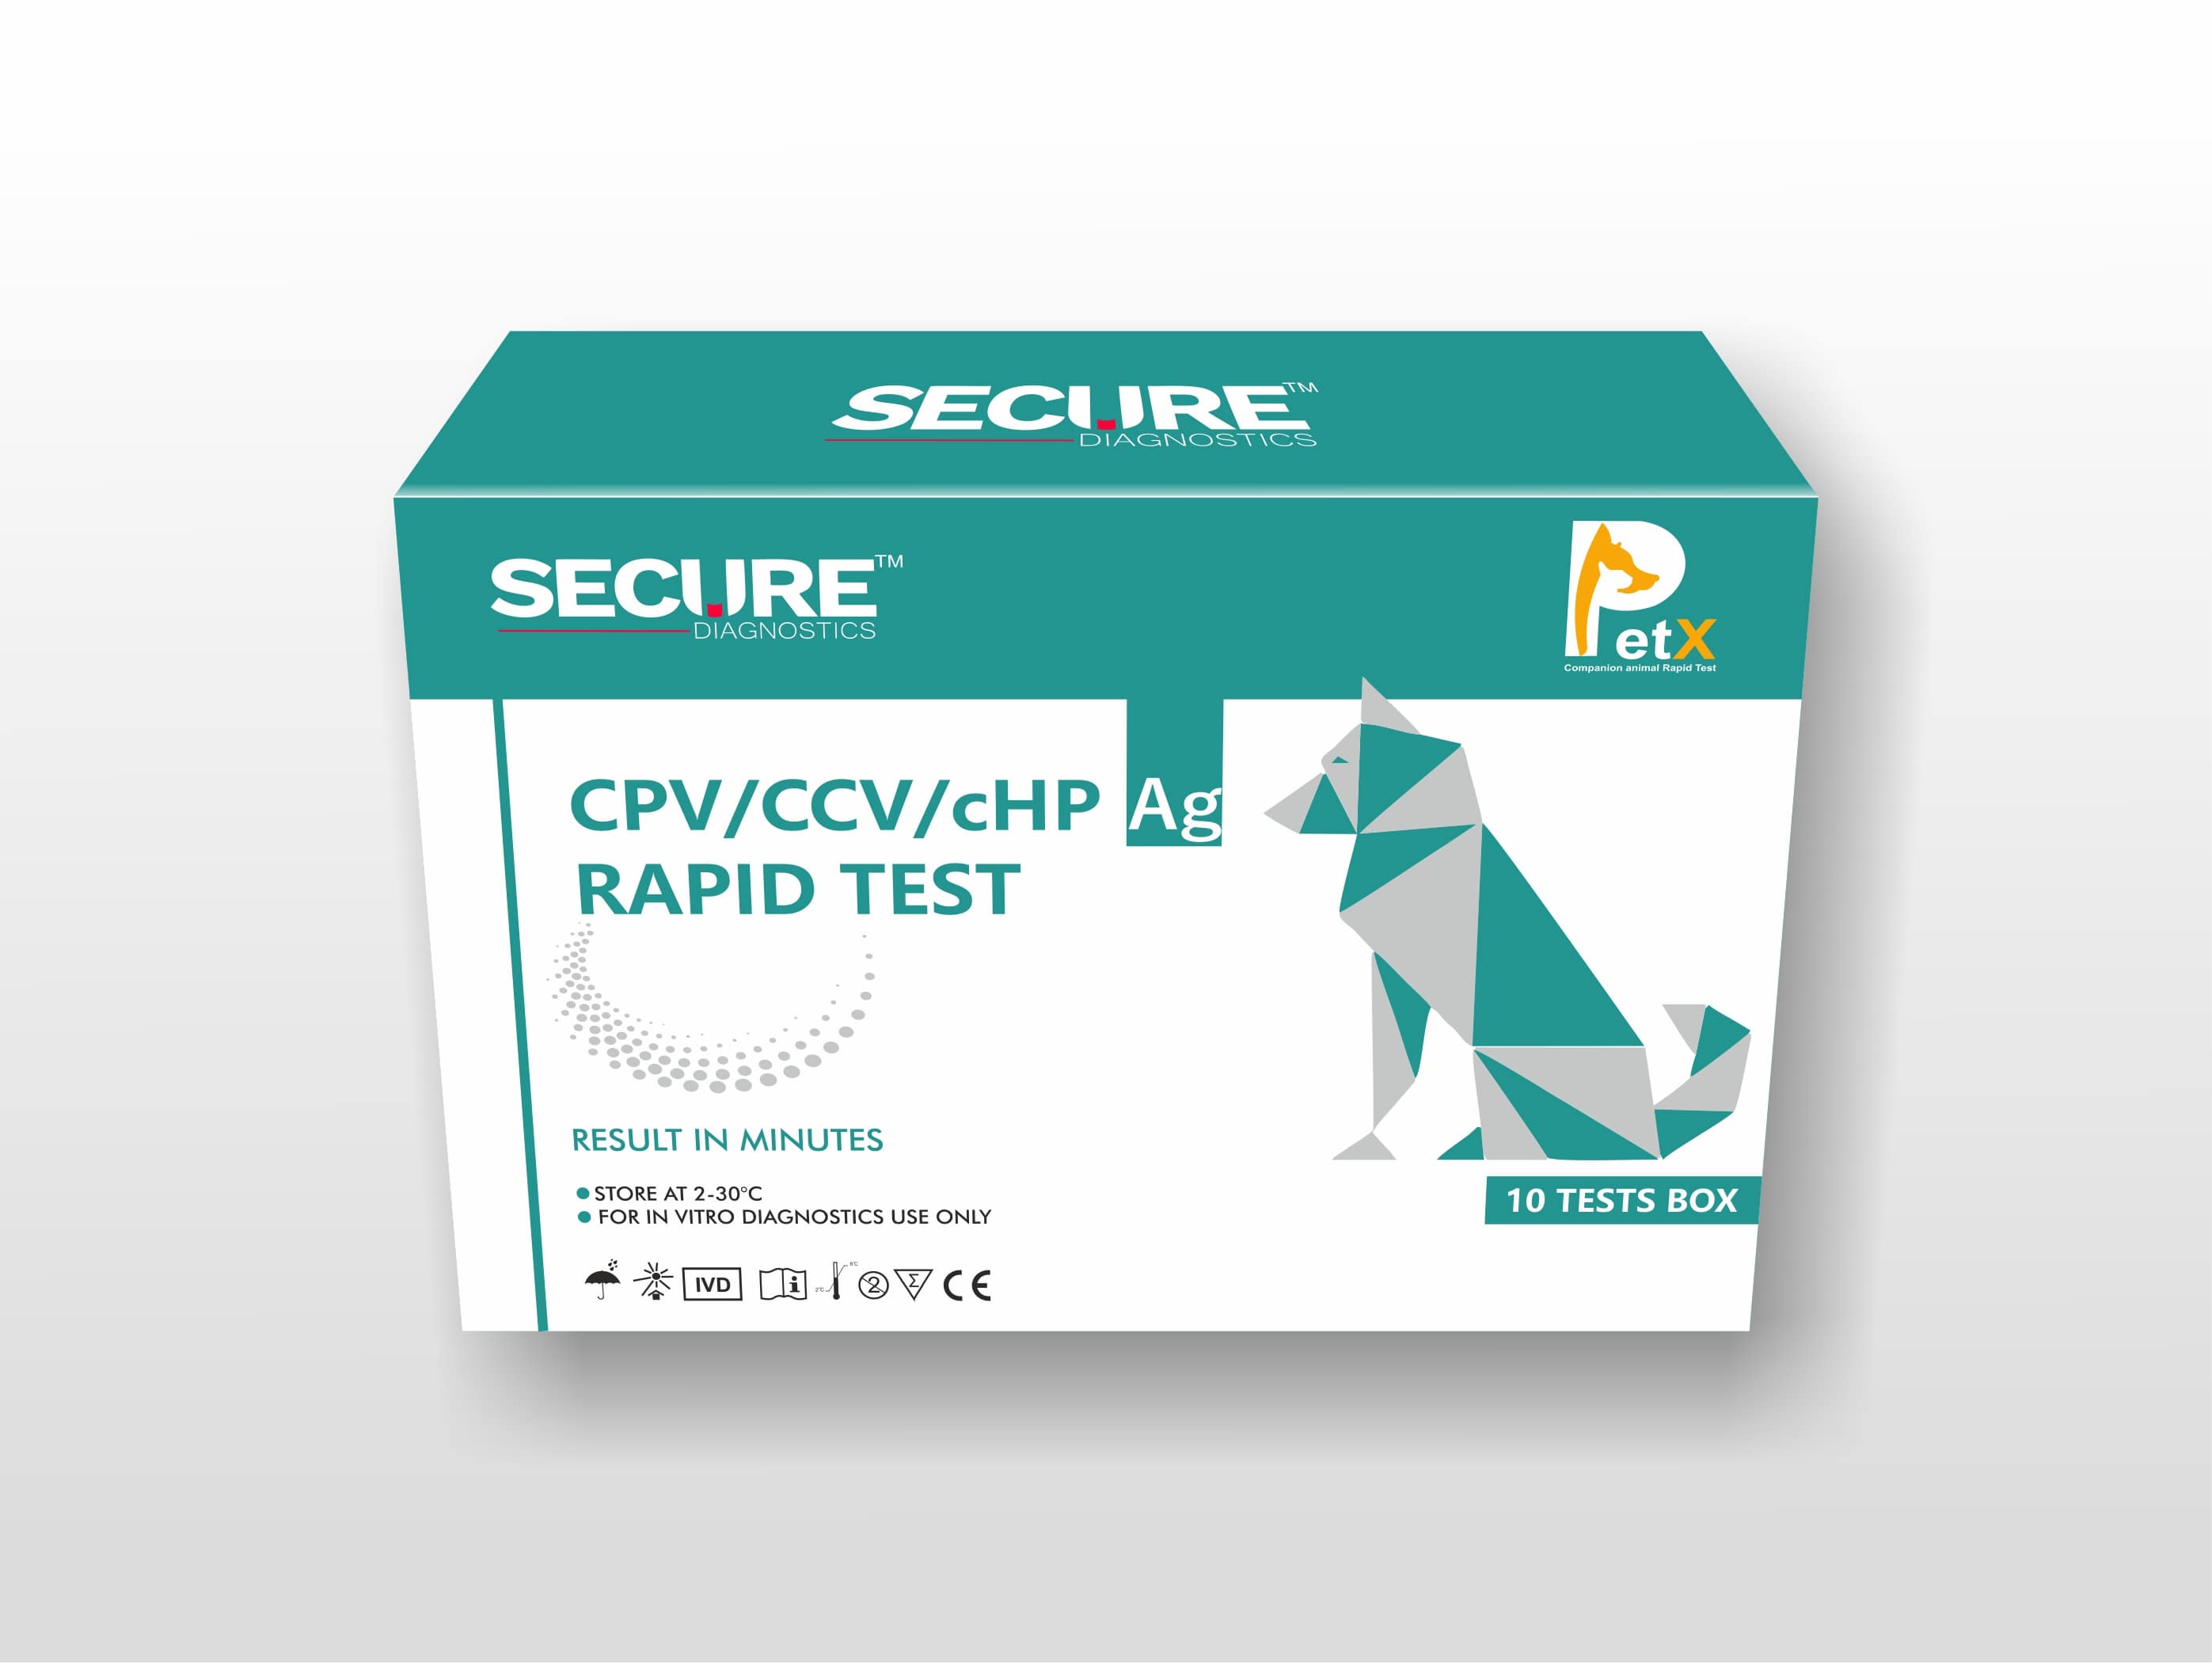 Canine Parvovirus/Coronavirus/Herpesvirus Quantitative (CPV/CCV/cHP Ag) Antigen Test kit